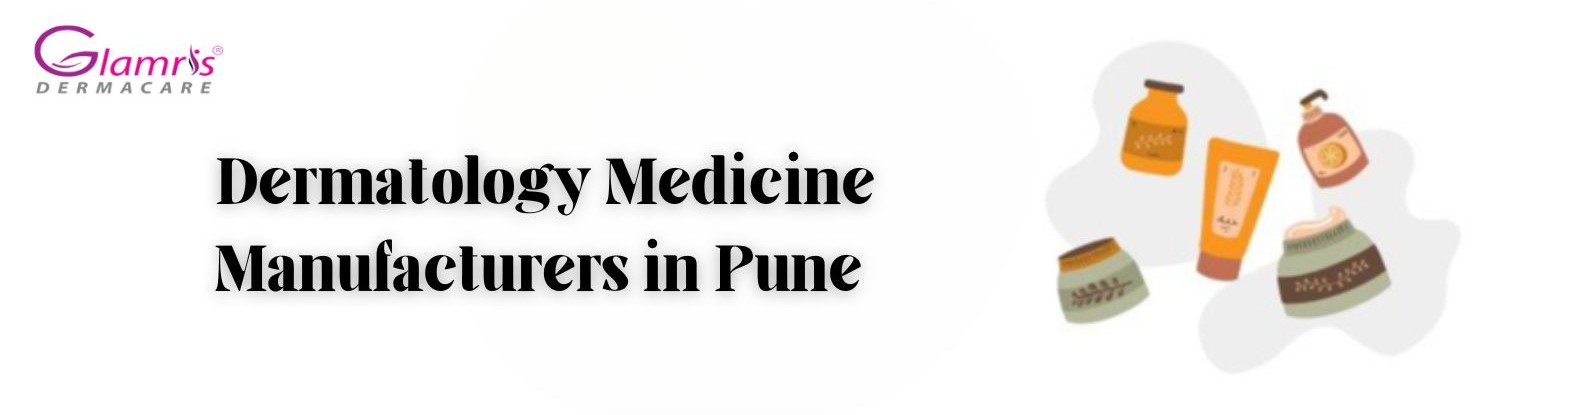 Dermatology Medicine Manufacturers in Pune